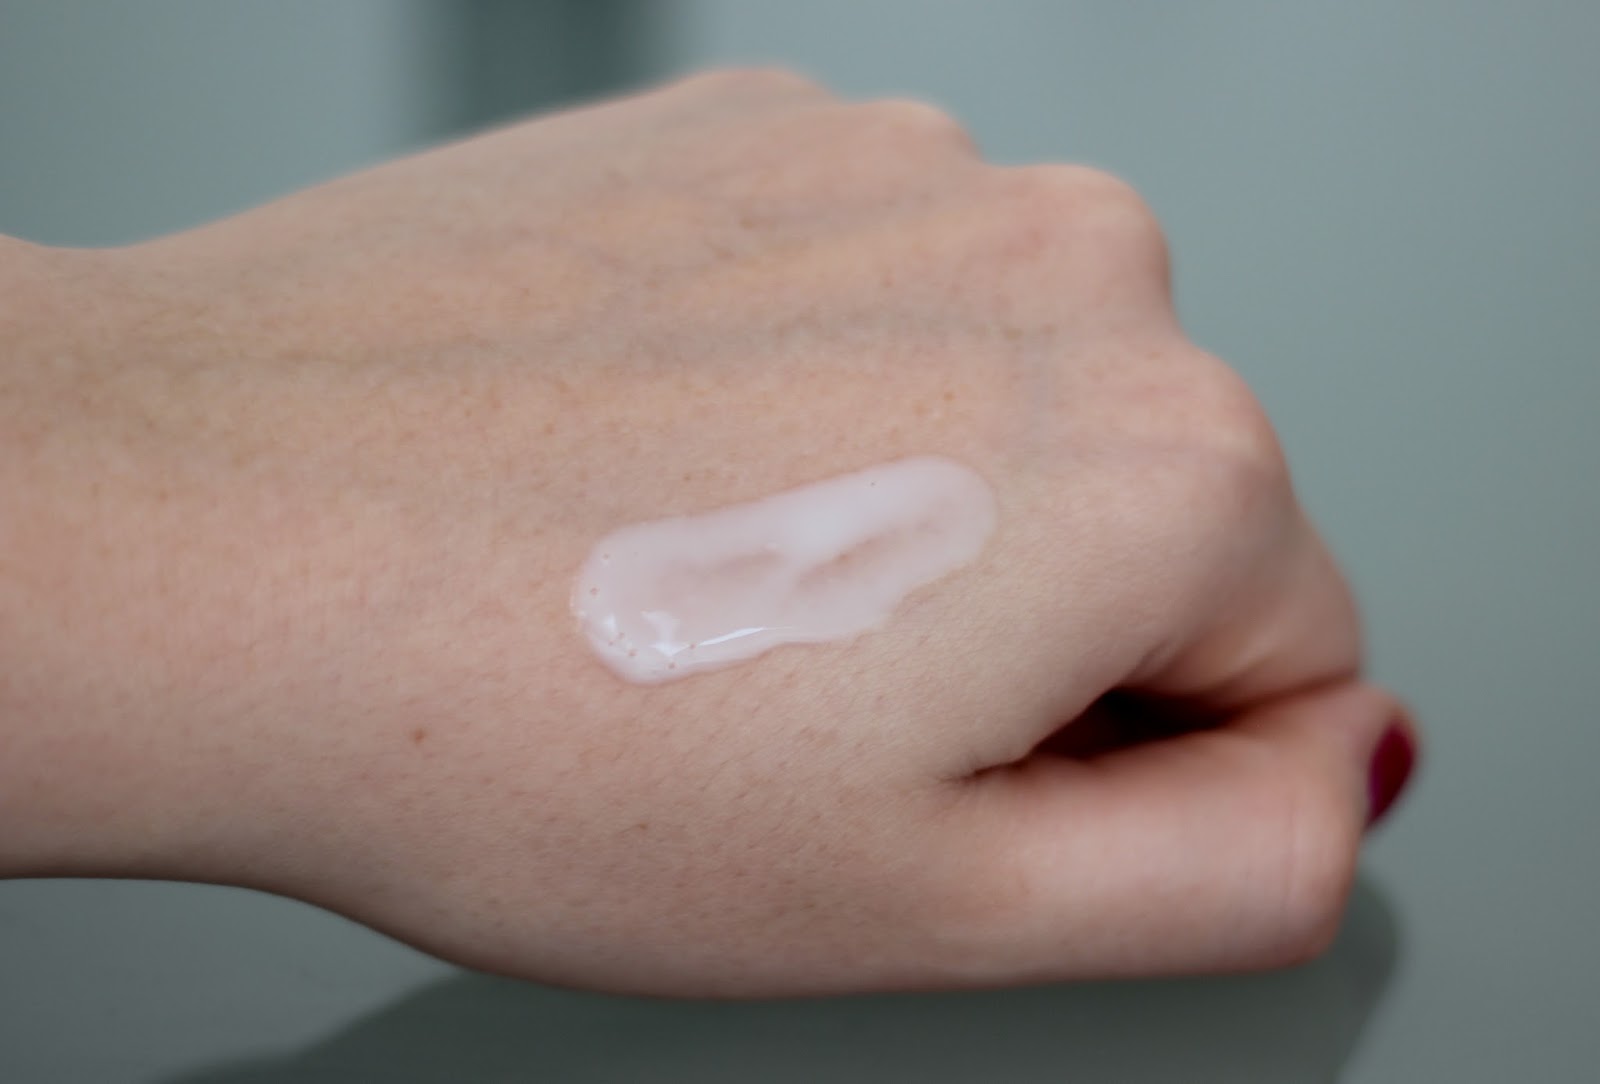 Caudalie Polyphenol C15 Anti-Wrinkle Defense Serum Swatch